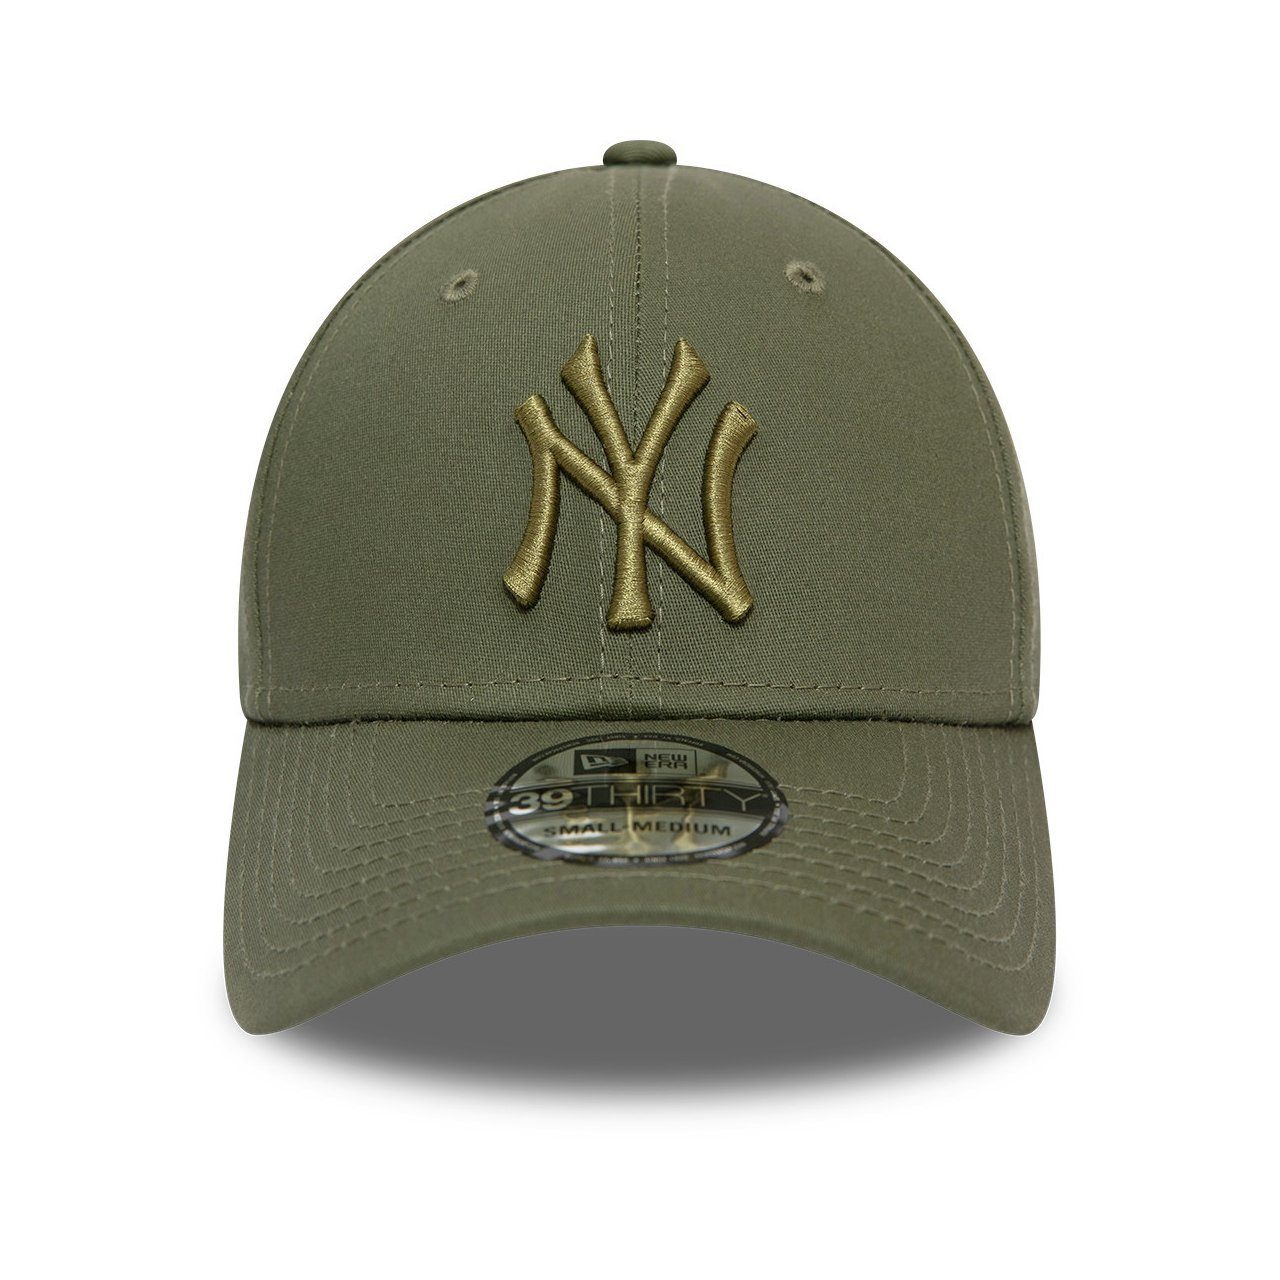 New New Yankees Flex York Cap Era 39Thirty